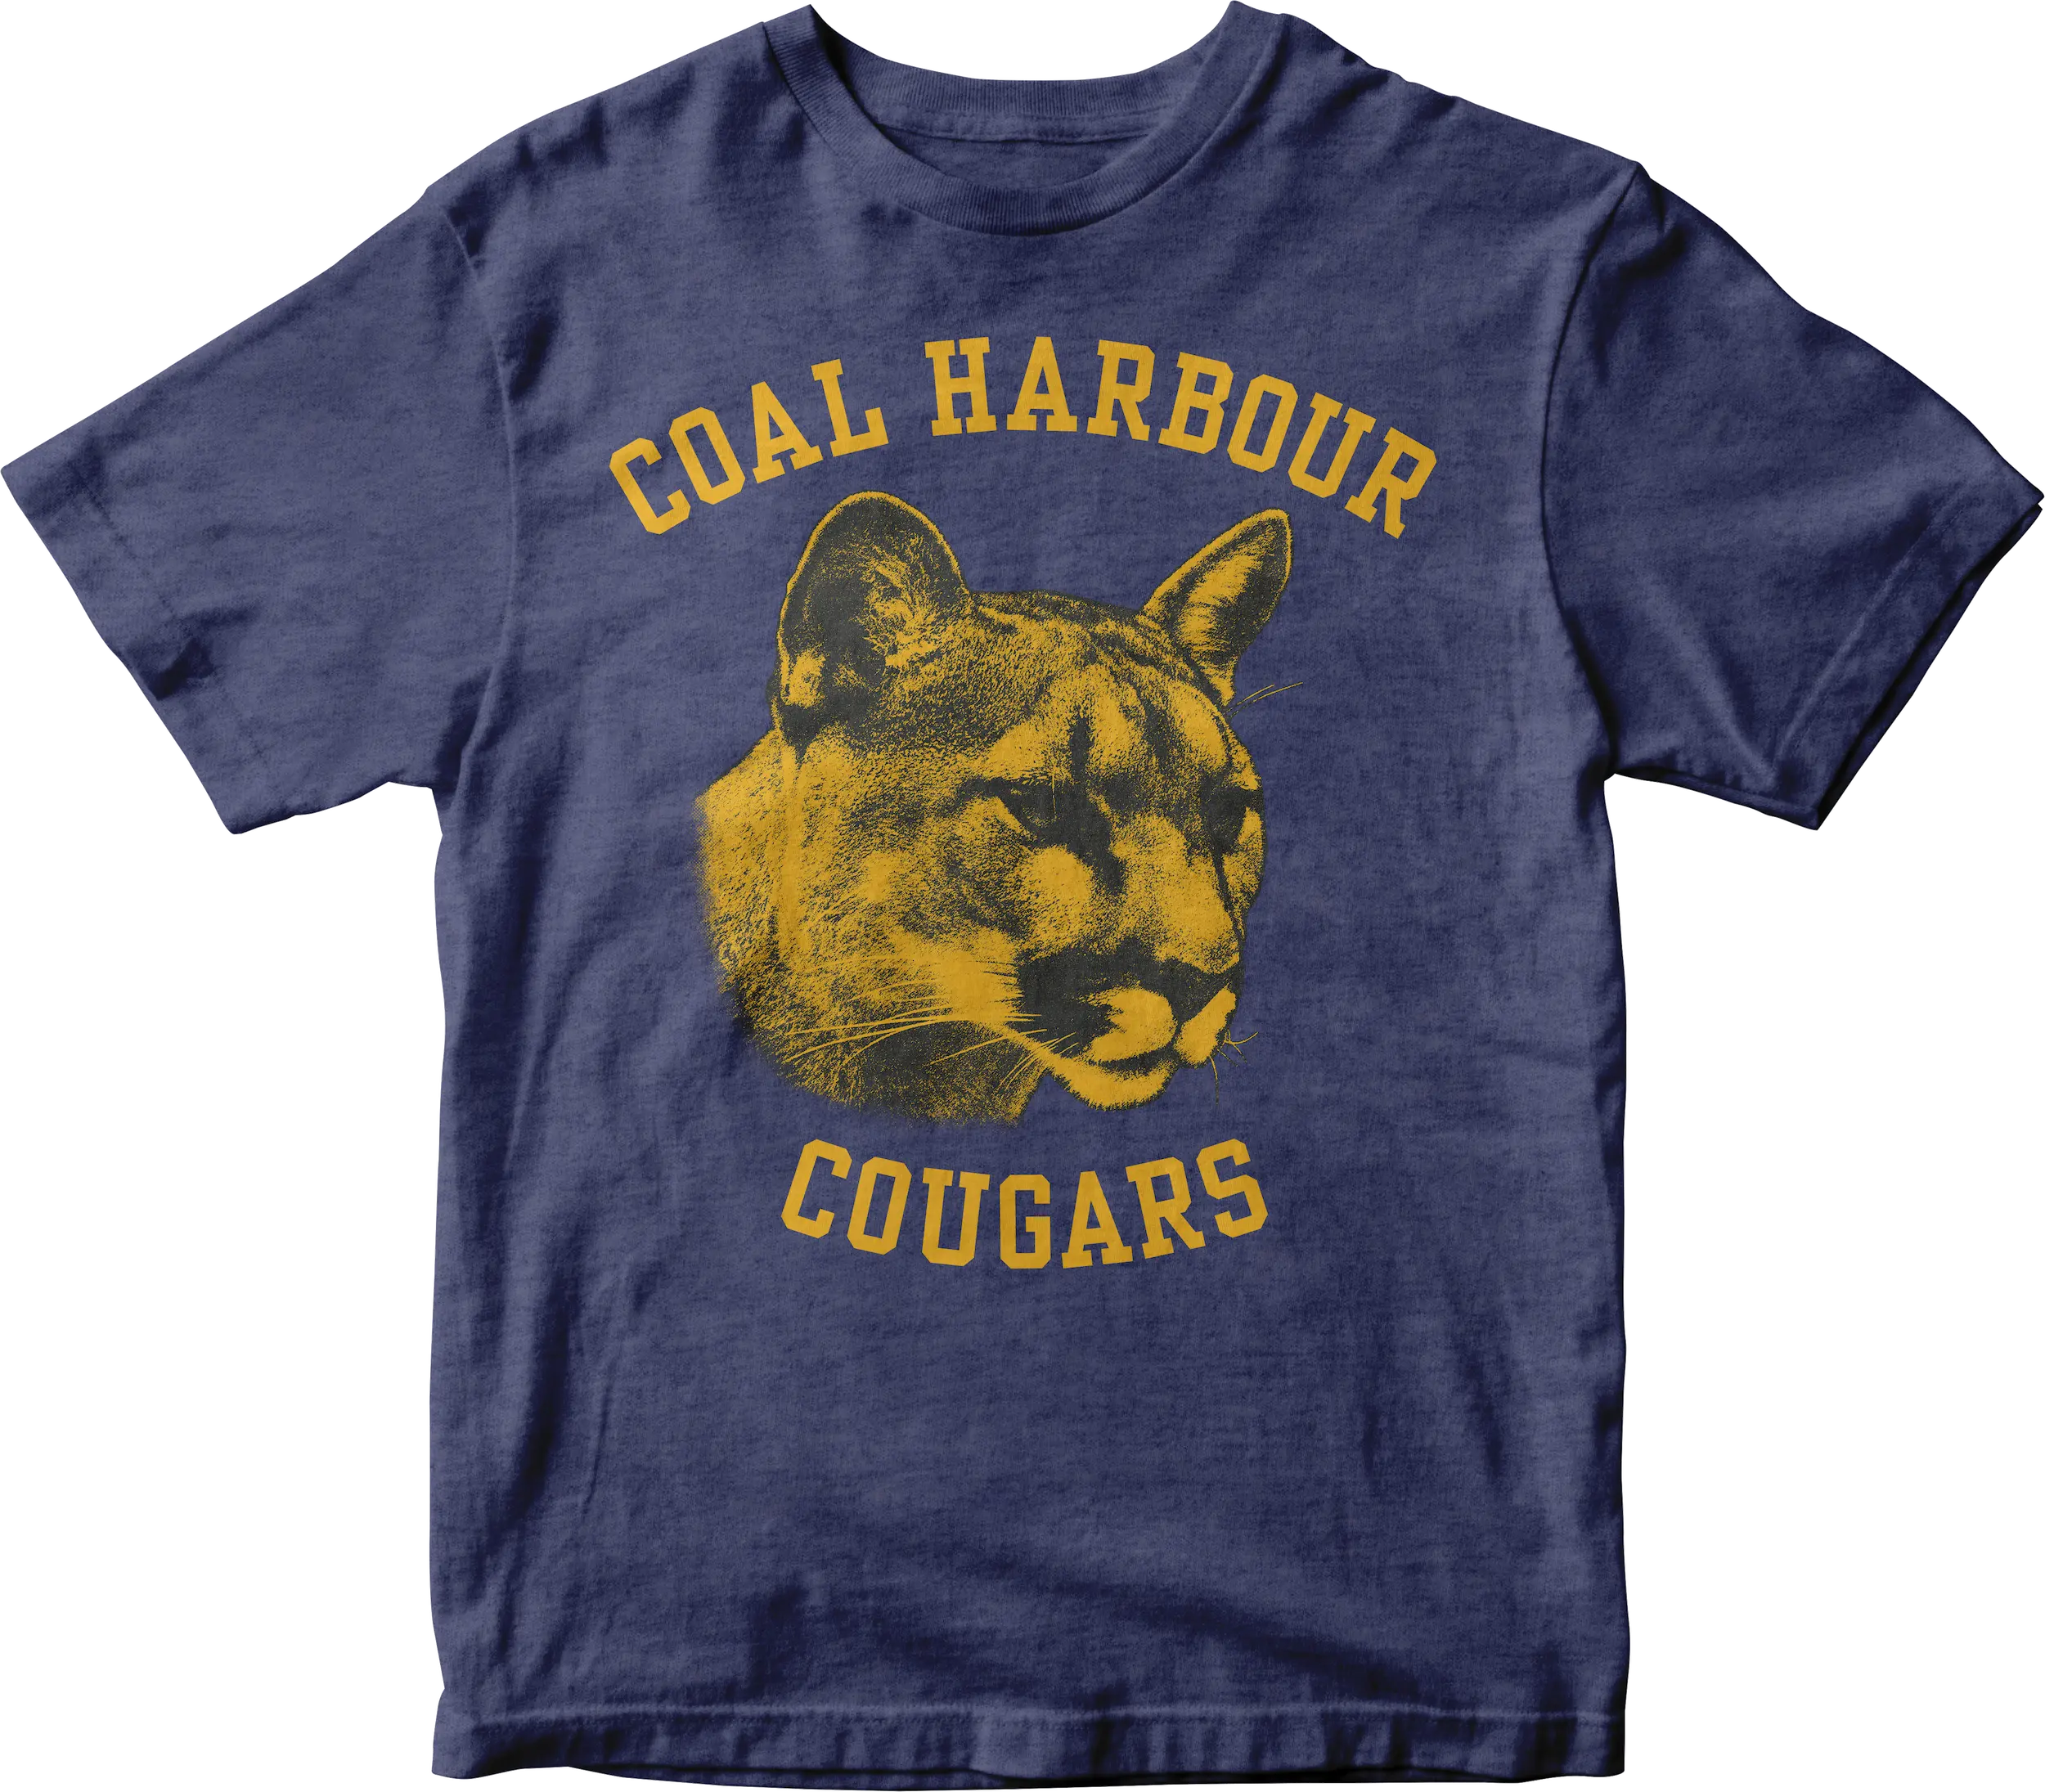 Coal Harbour Cougars T-Shirt